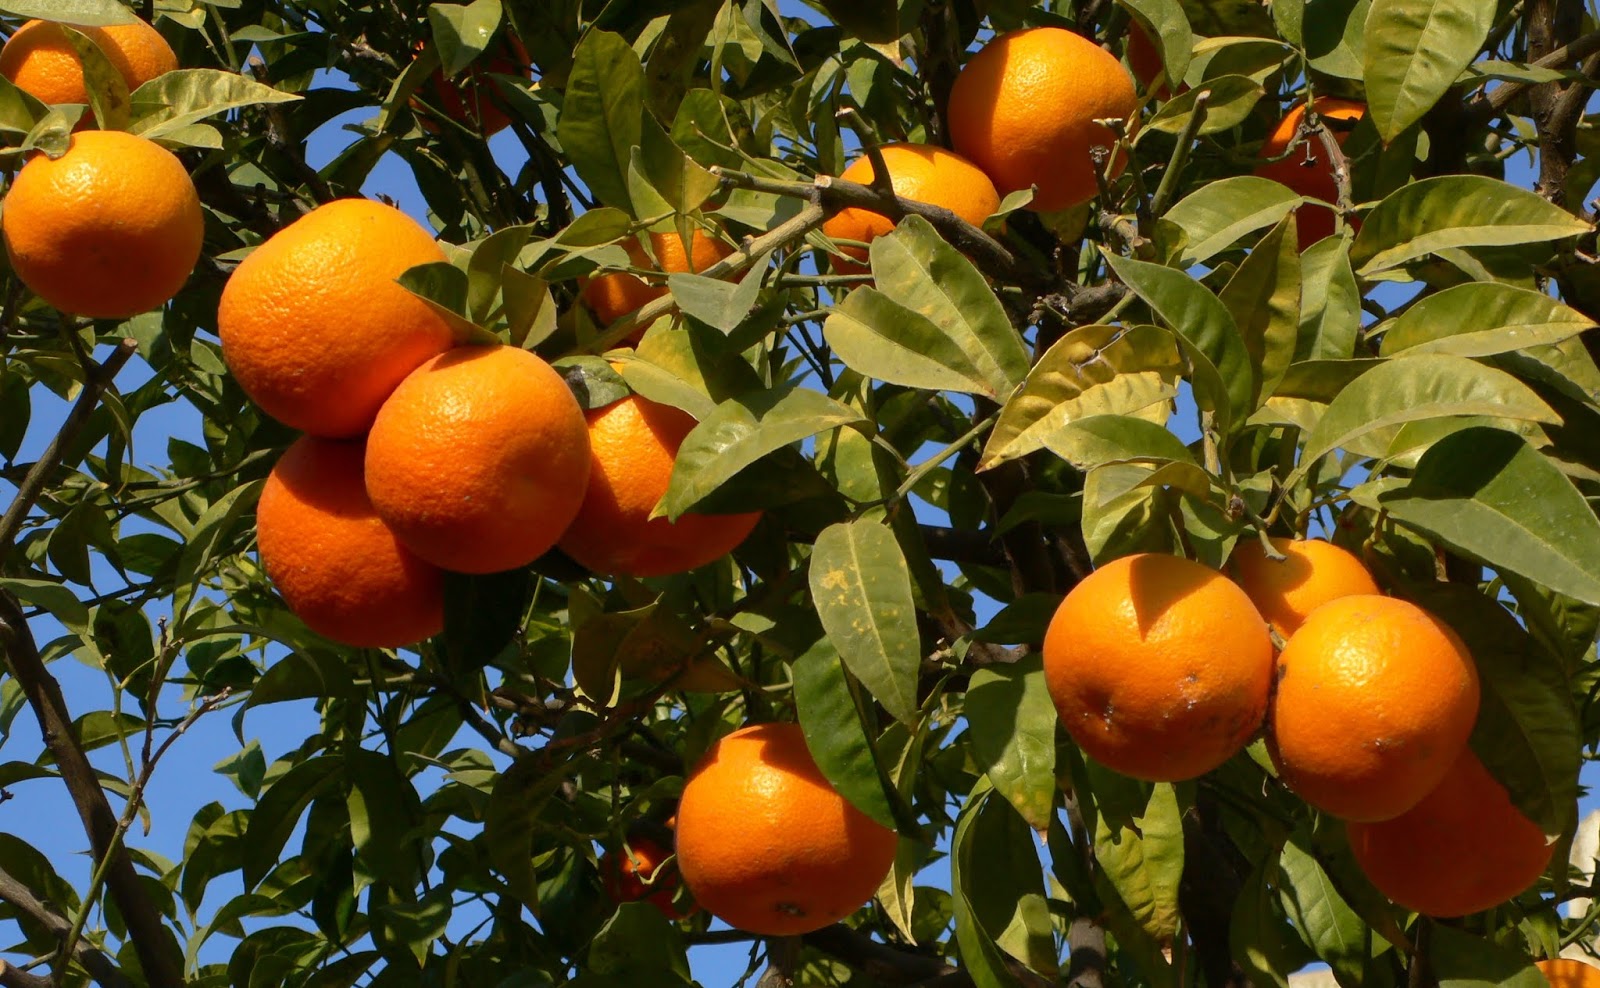 Ù†ØªÙŠØ¬Ø© Ø¨Ø­Ø« Ø§Ù„ØµÙˆØ± Ø¹Ù† â€ªPicking the Right Orange Treeâ€¬â€